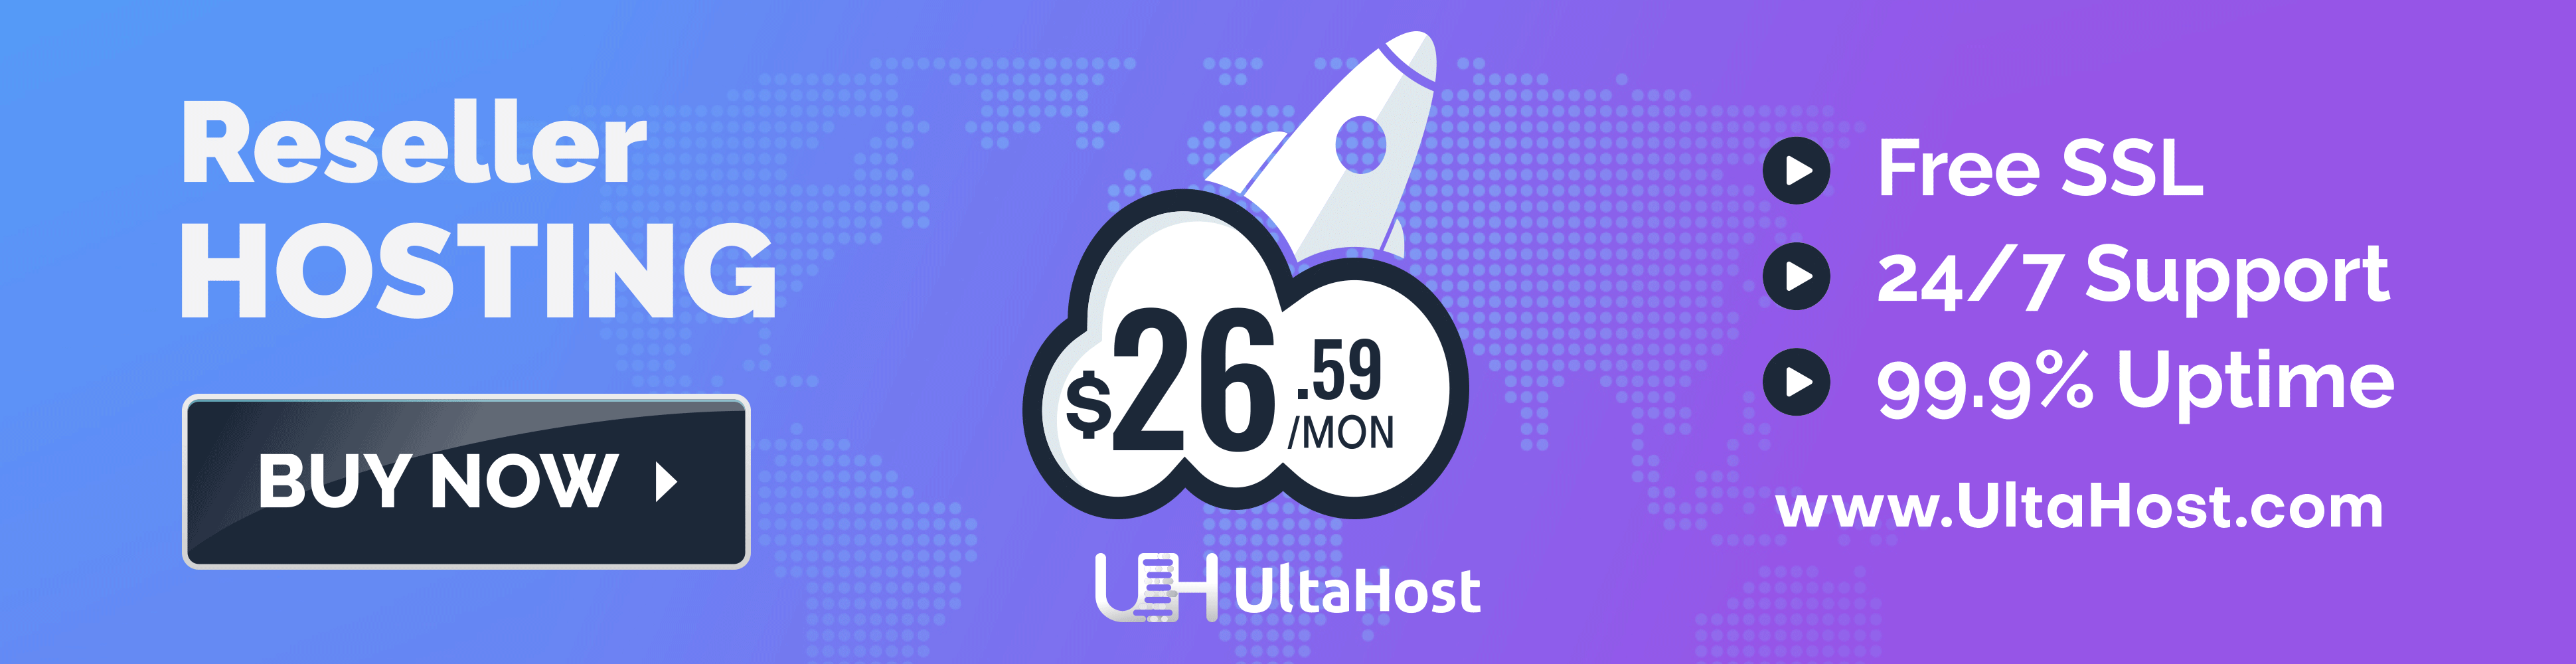 ultahost_cheap_reseller_hosting_970x250